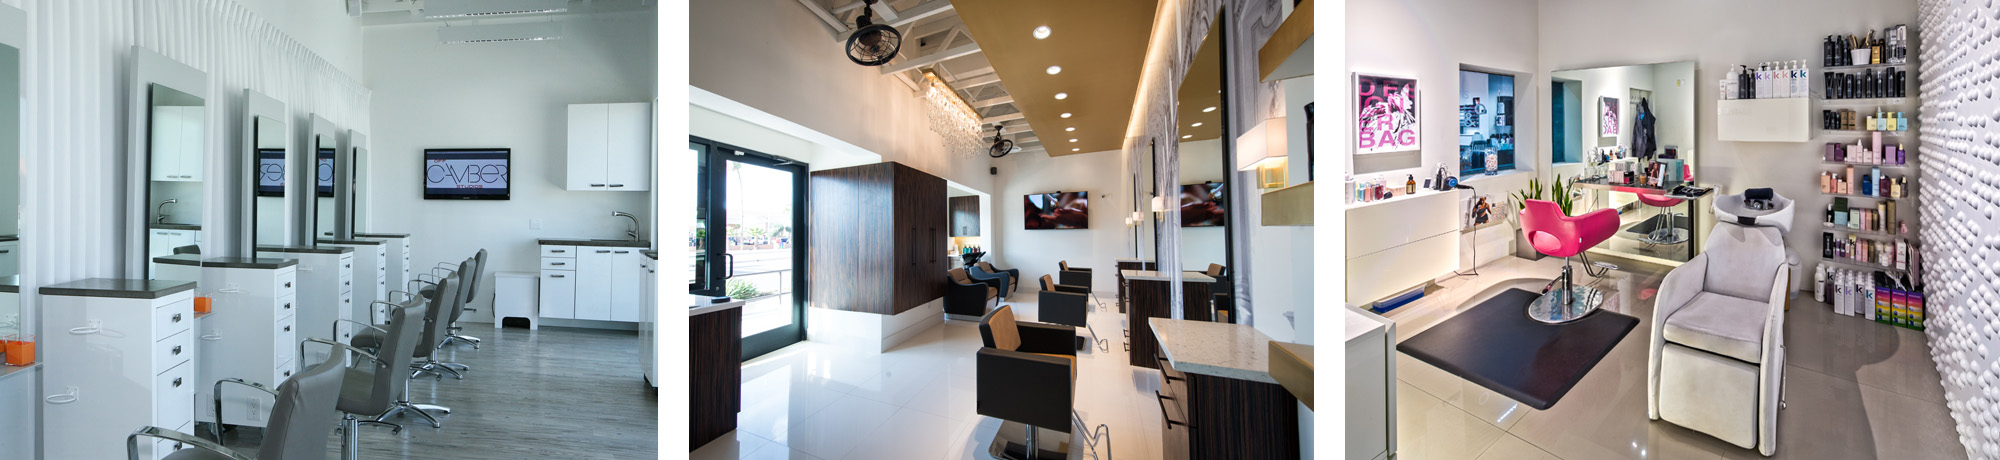 Arizona salon studios for lease